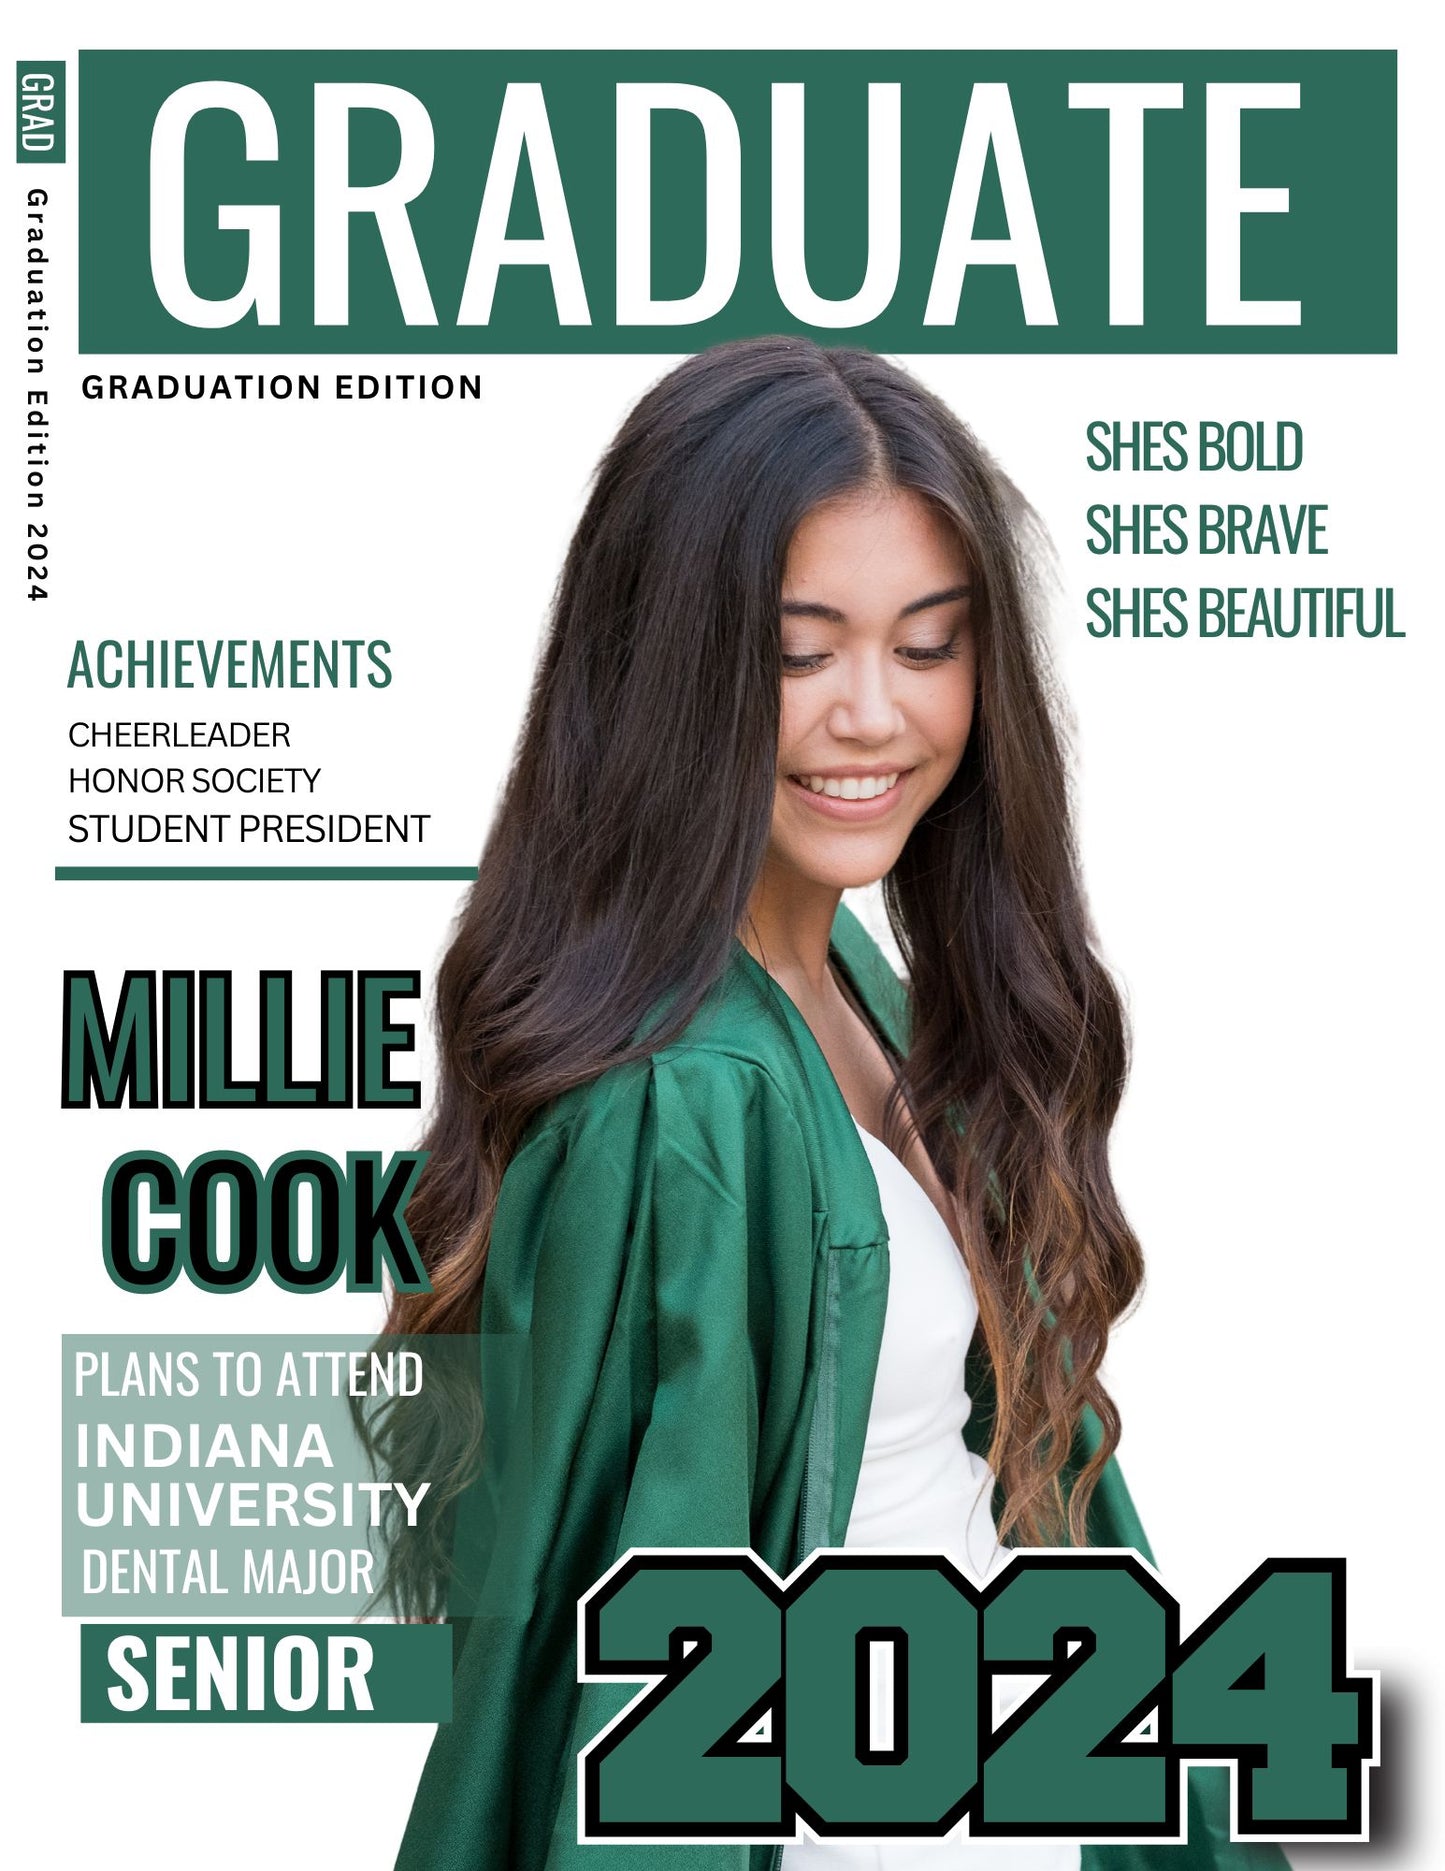 Graduate Magazine Digital Cover